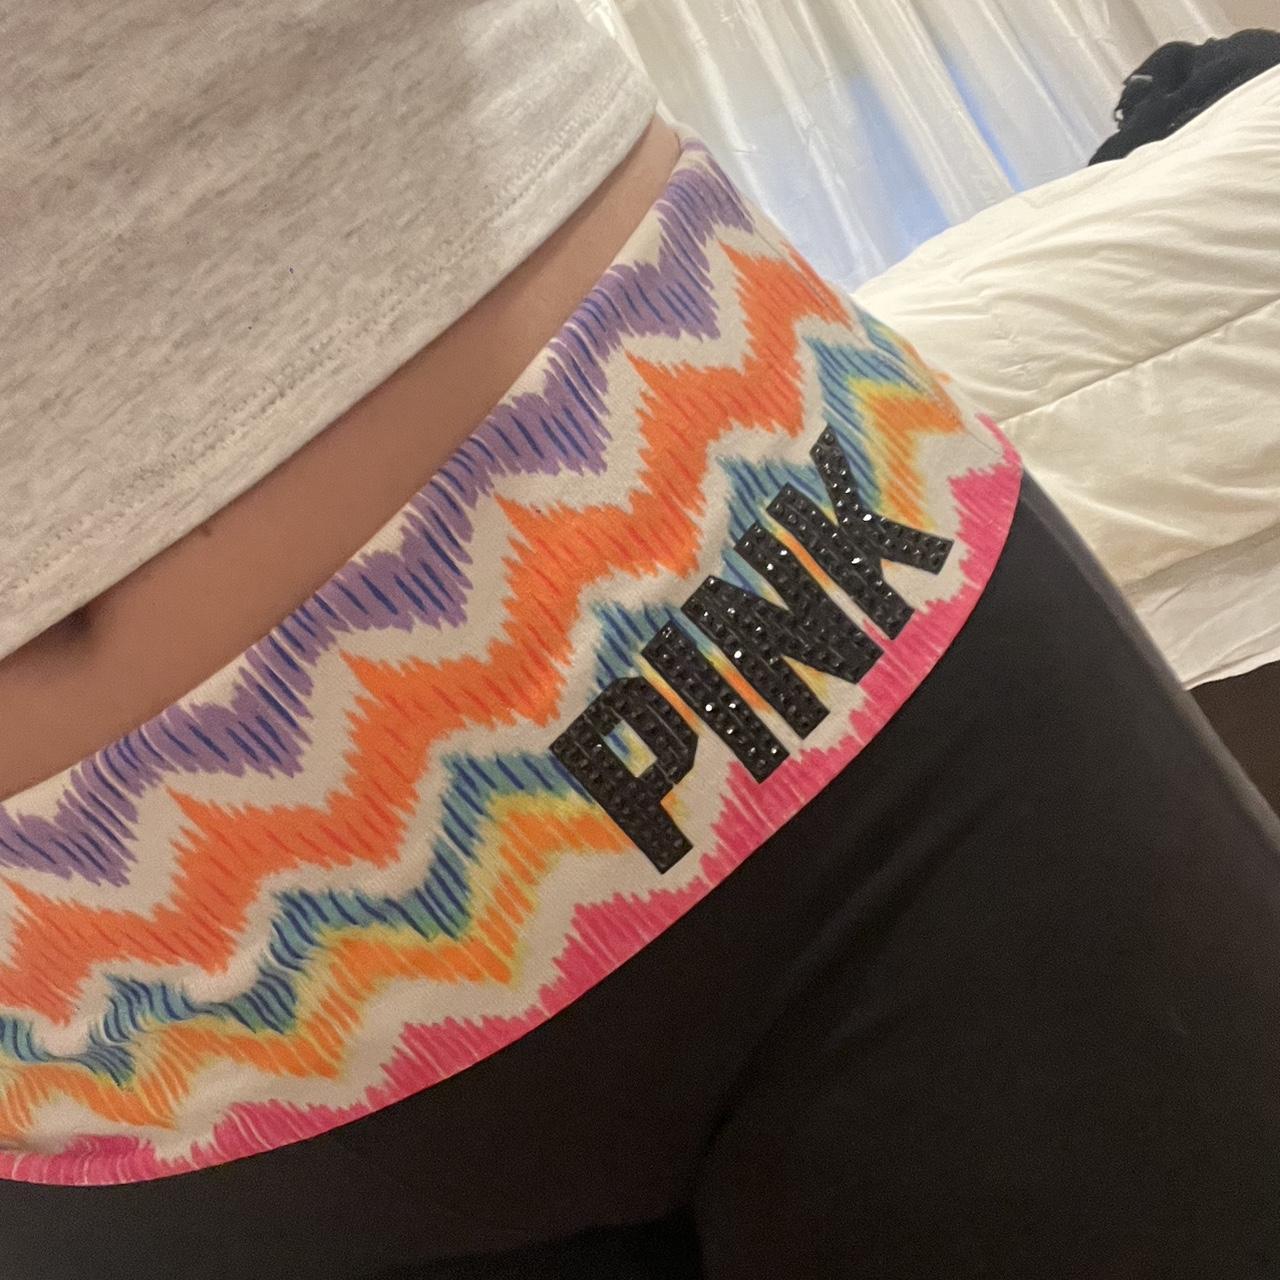 Victoria’s Secret pink flare yoga pants. Colorful